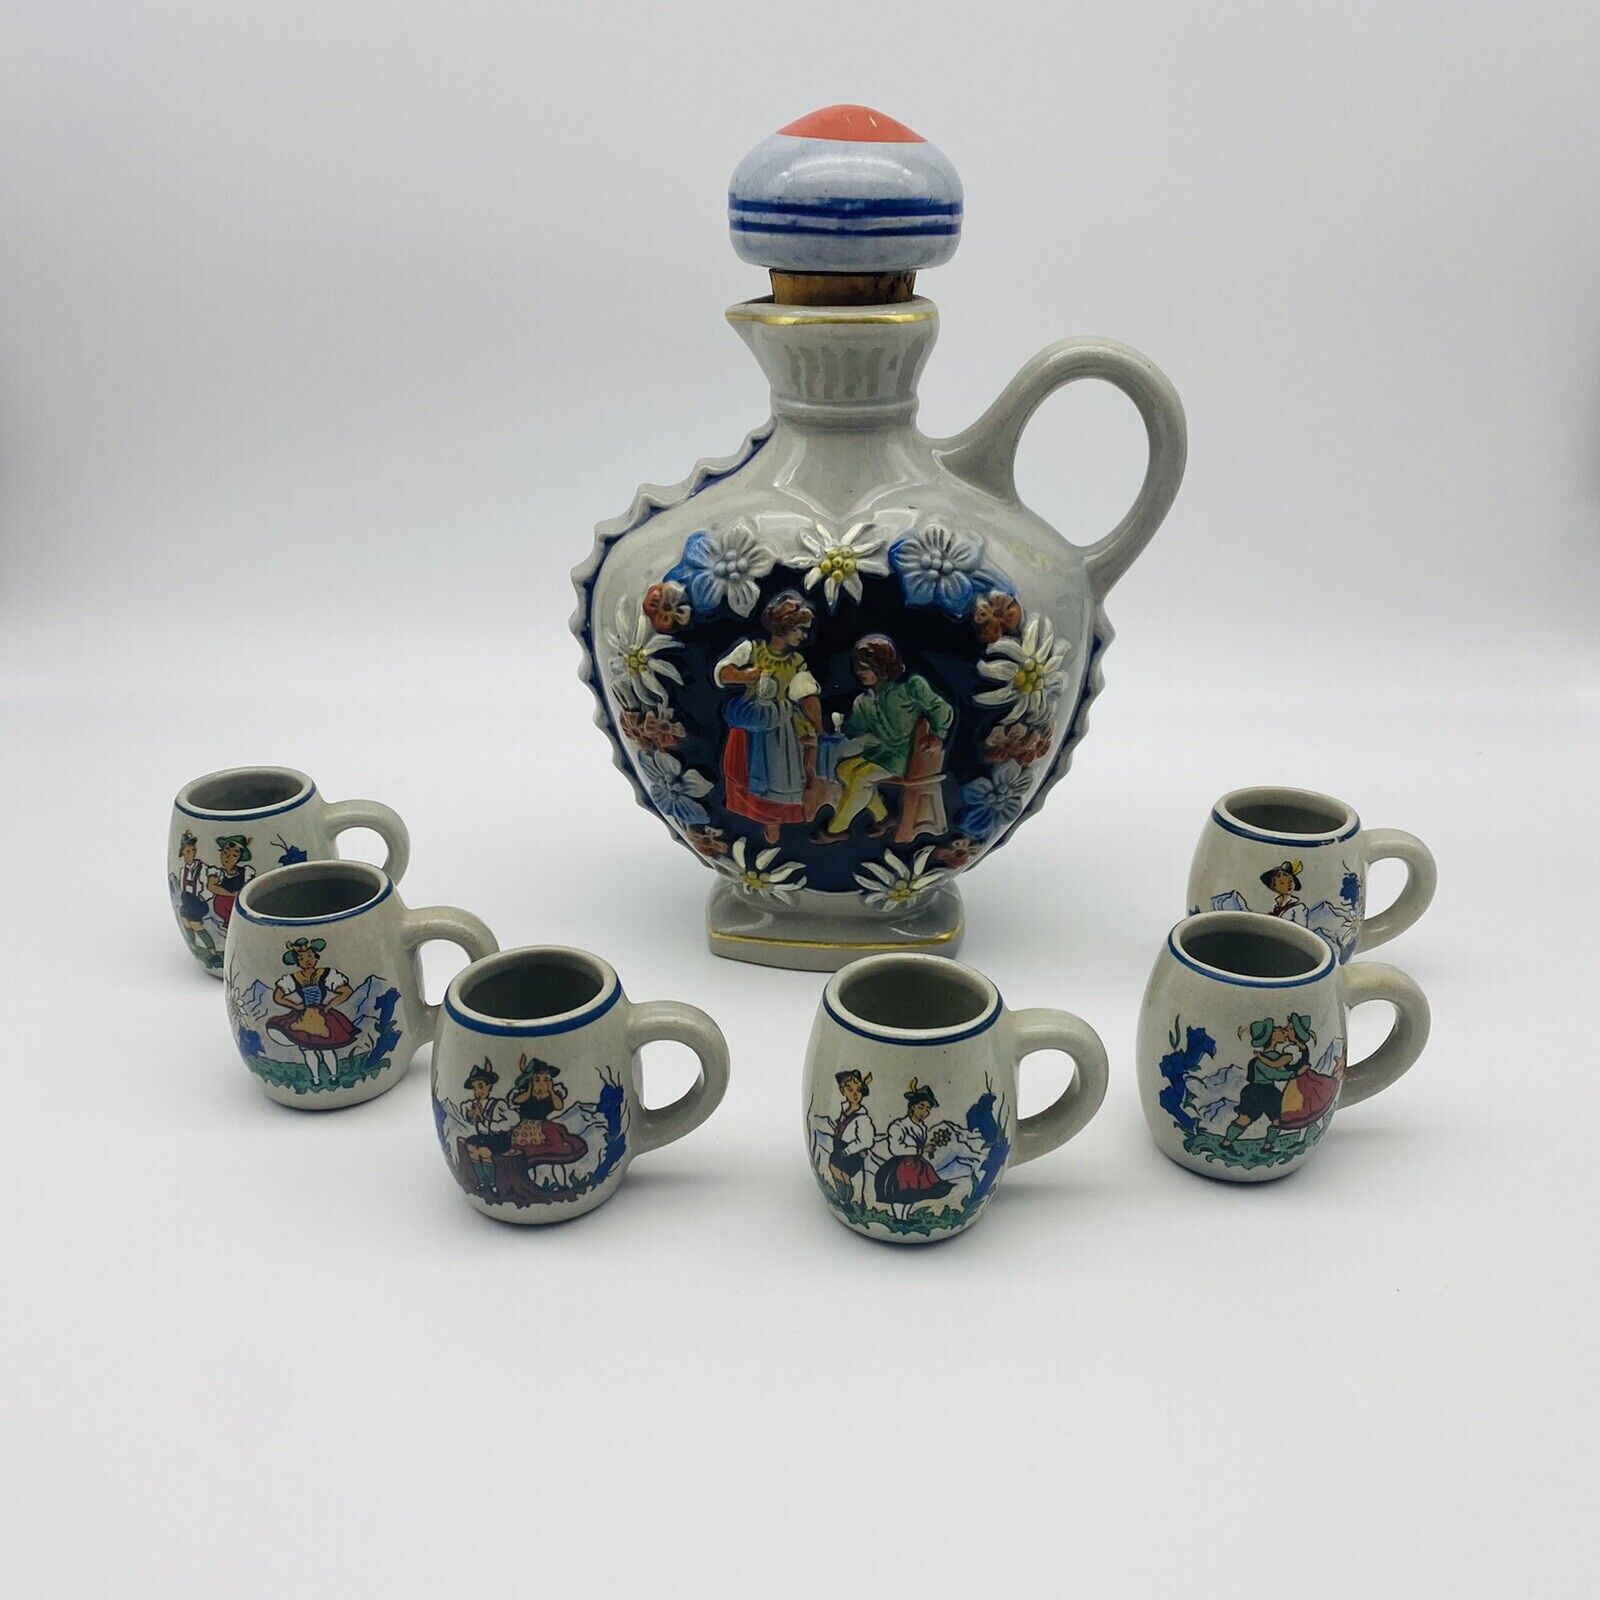 Vintage German Decanter and 6 Shot Glasses with Handles Embossed #2948 Porcelain